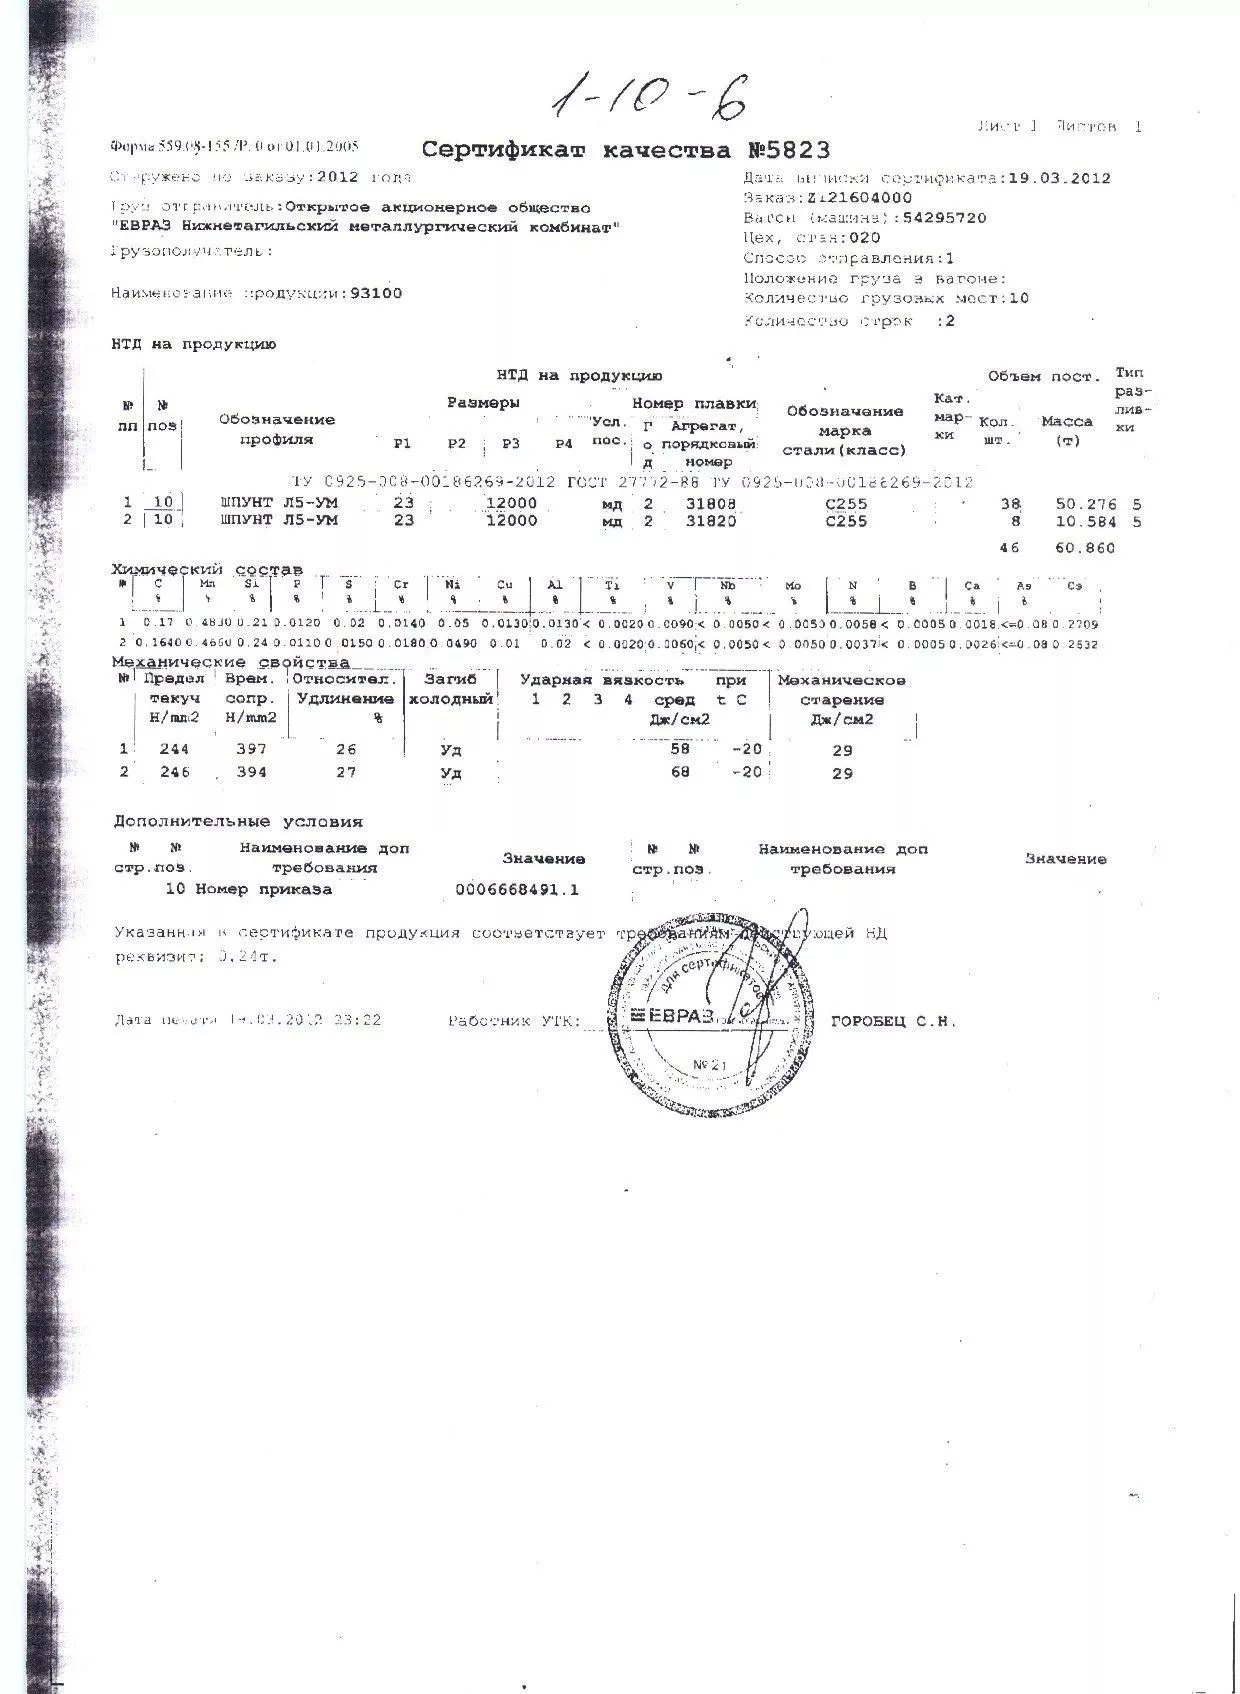 Сертификат на шпунт Л5УМ (1)